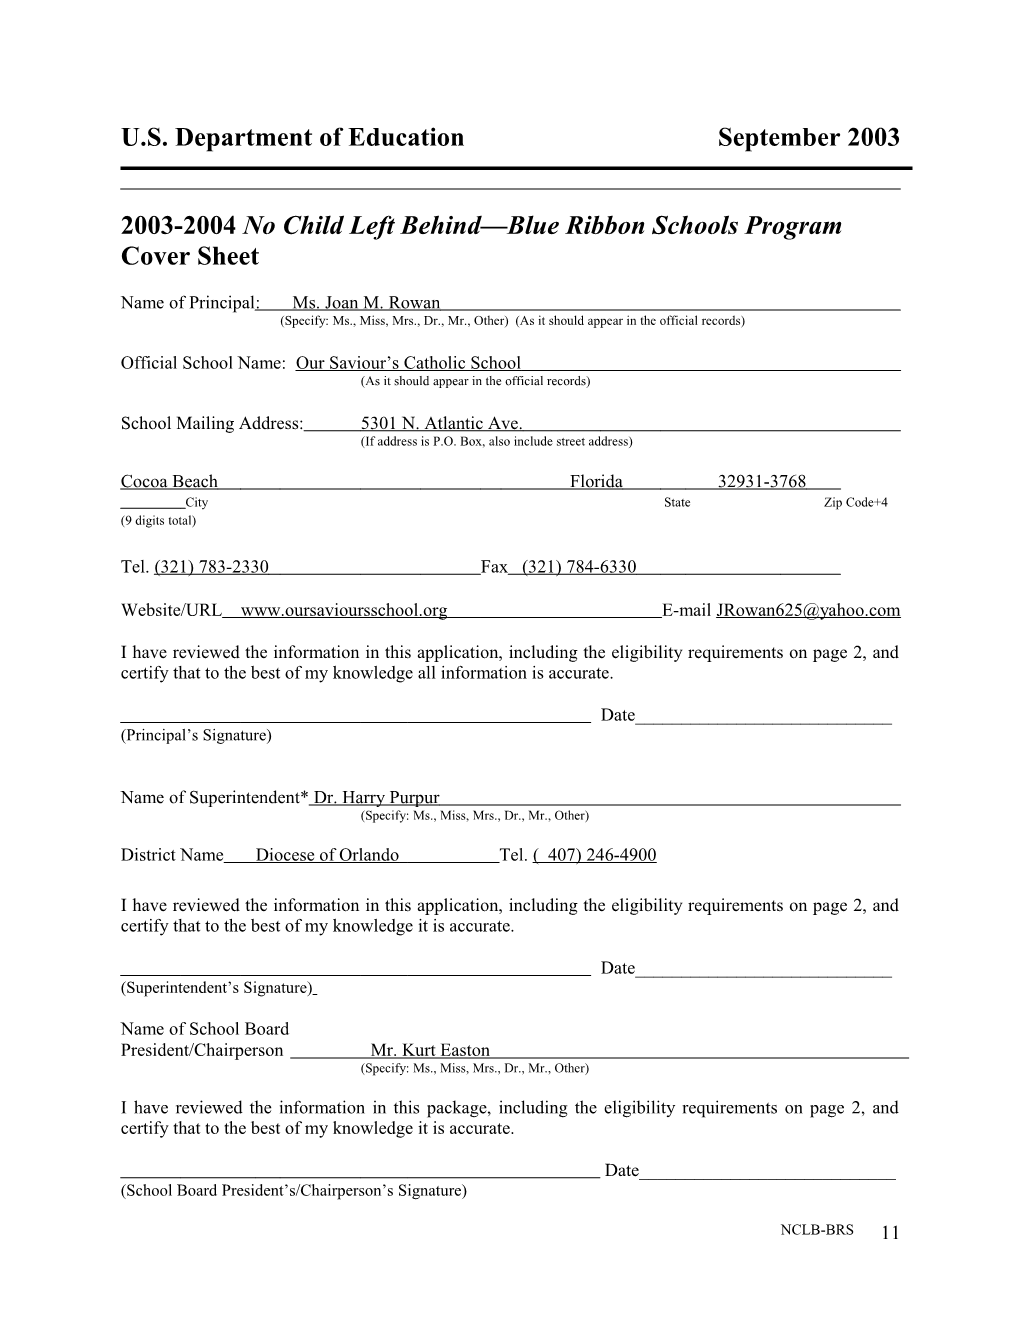 Our Saviour's Catholic School 2004 No Child Left Behind-Blue Ribbon School Application (Msword)